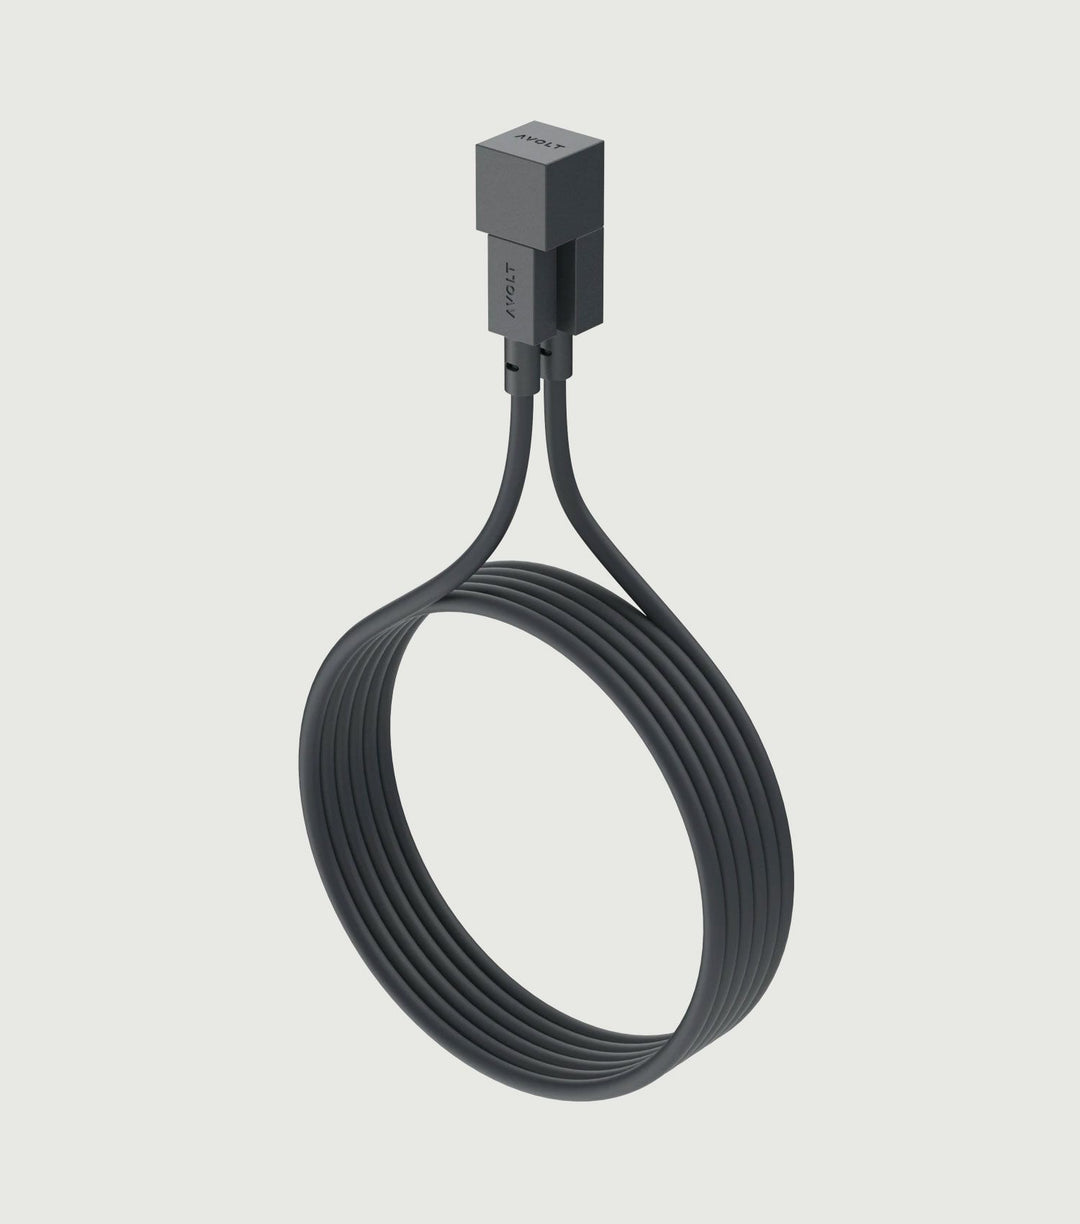 Cable 1 1,8m Lighting to USB A Stockholm Black - Avolt